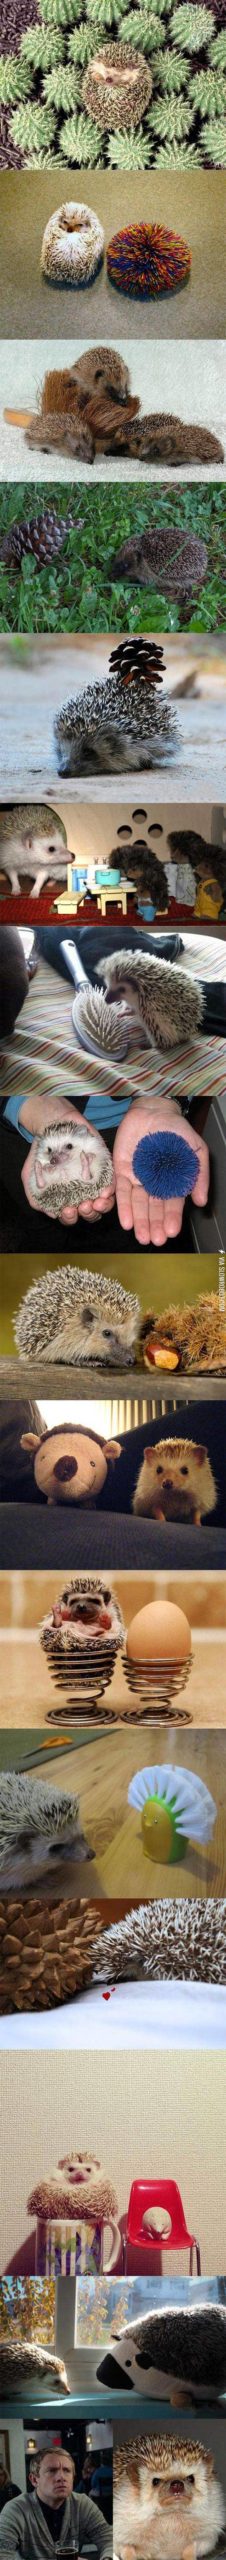 Hedgehogs+Next+To+Things+That+Look+Like+Hedgehogs